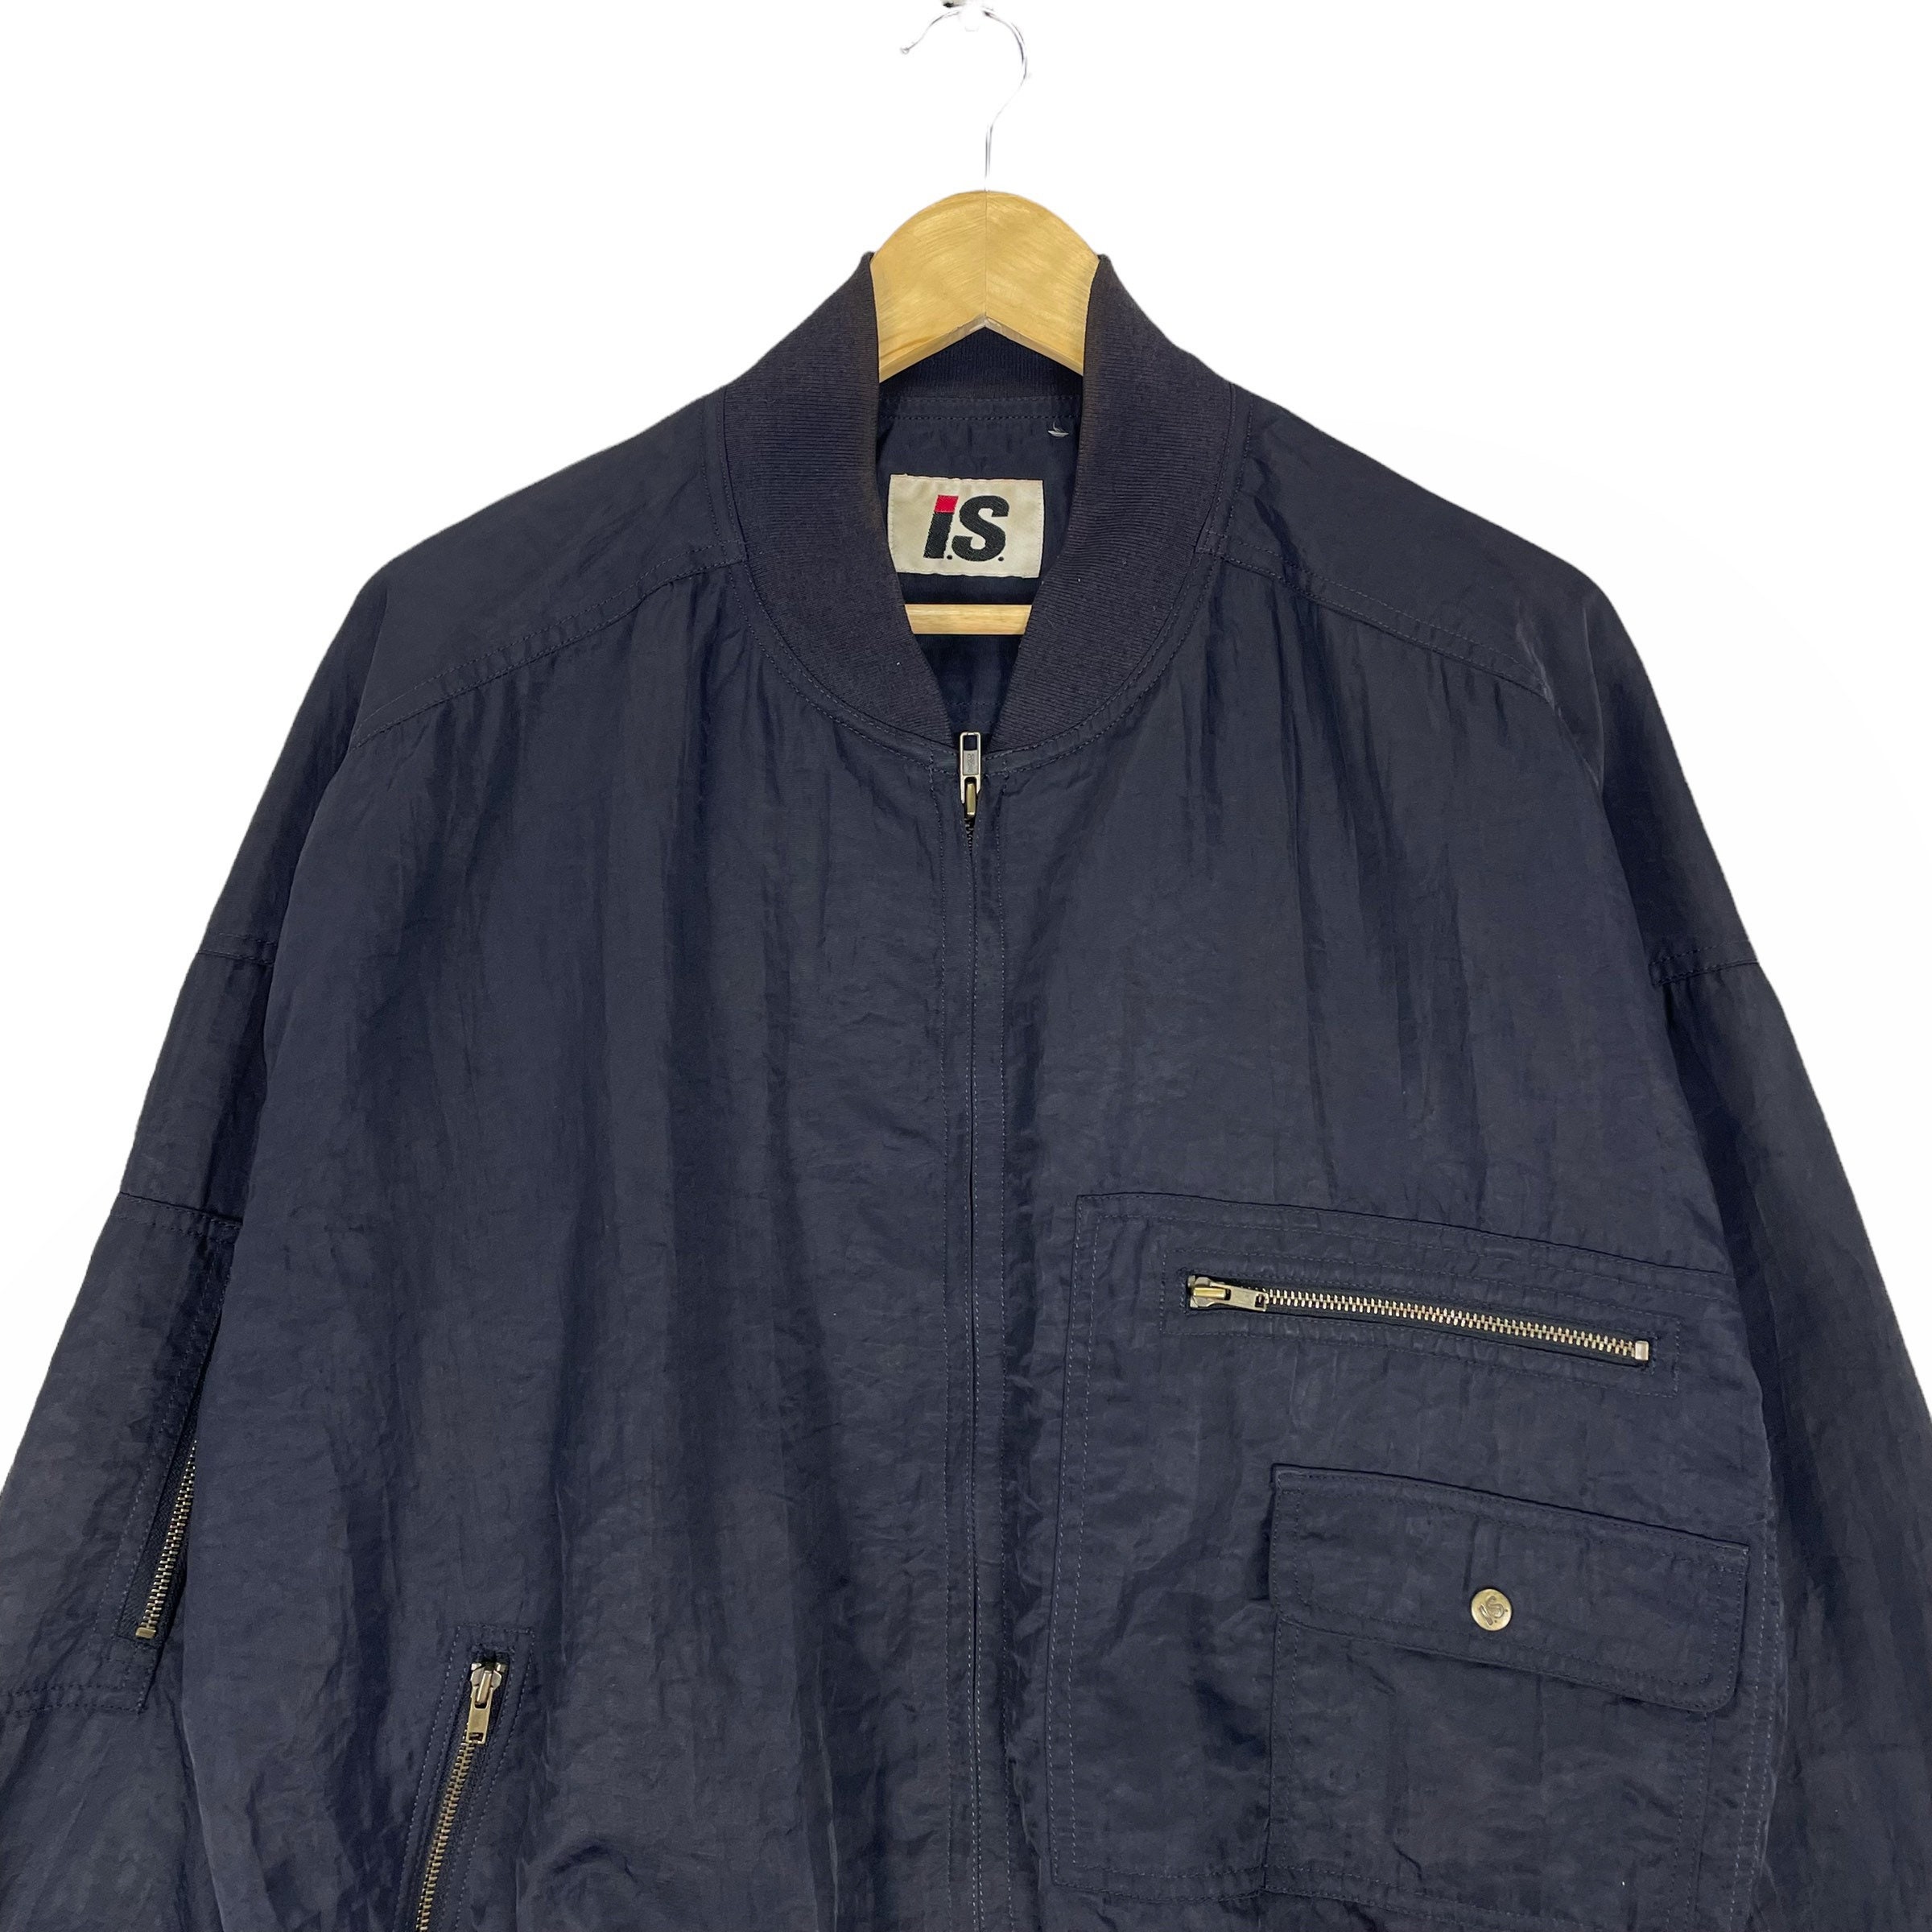 Vintage 80s Issey Miyake Jacket Tsumori Chisato Bomber Zipper